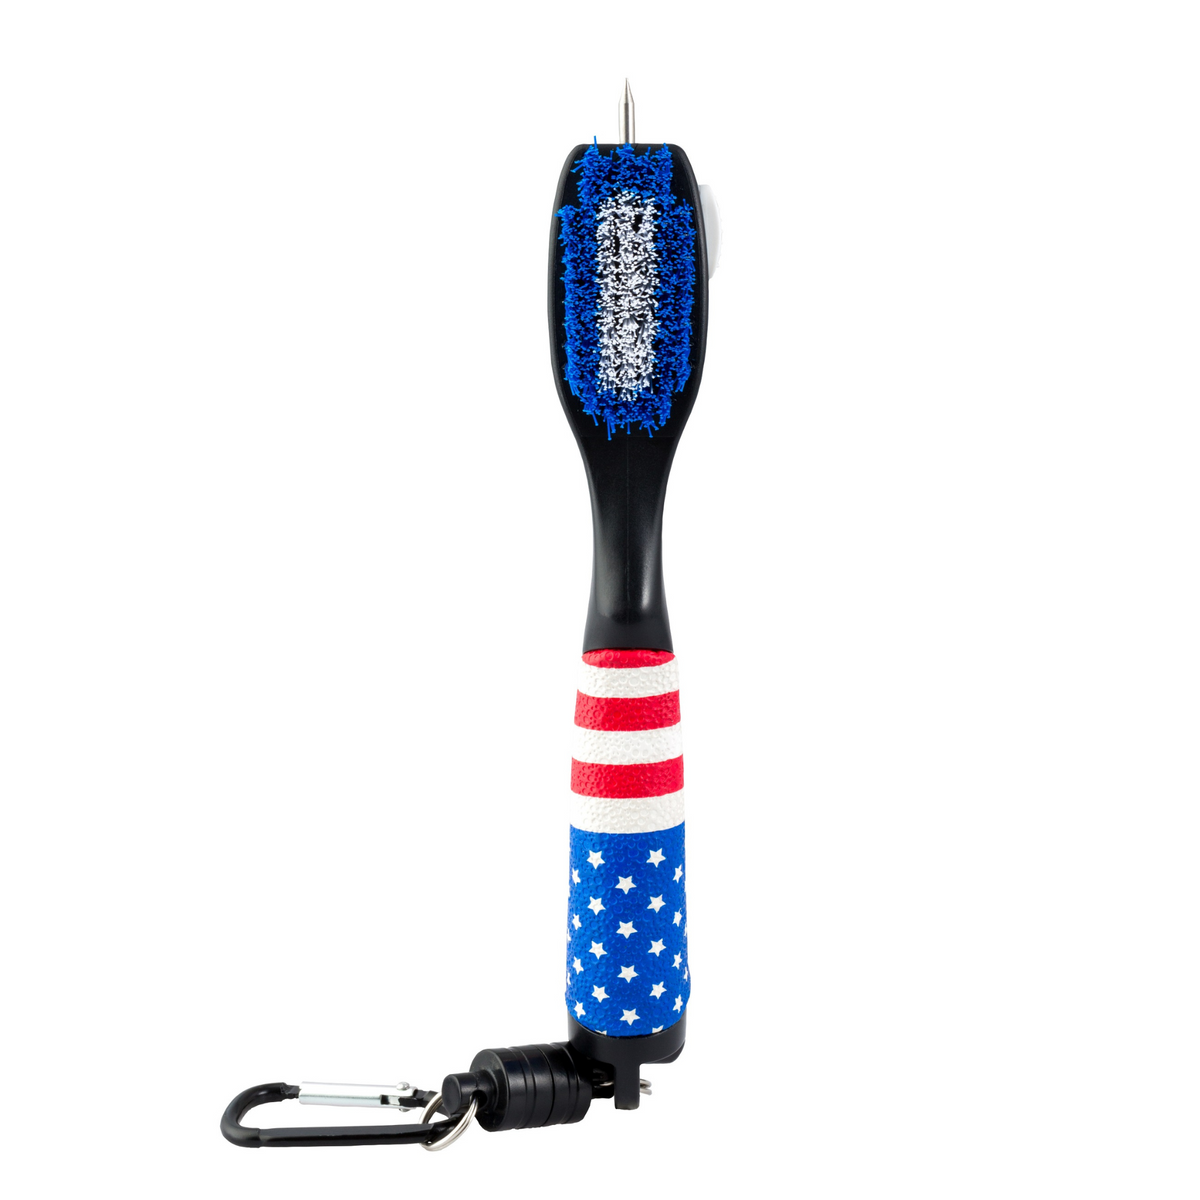 Magnetic Clip Golf Brush - USA Flag Design - Easy Access